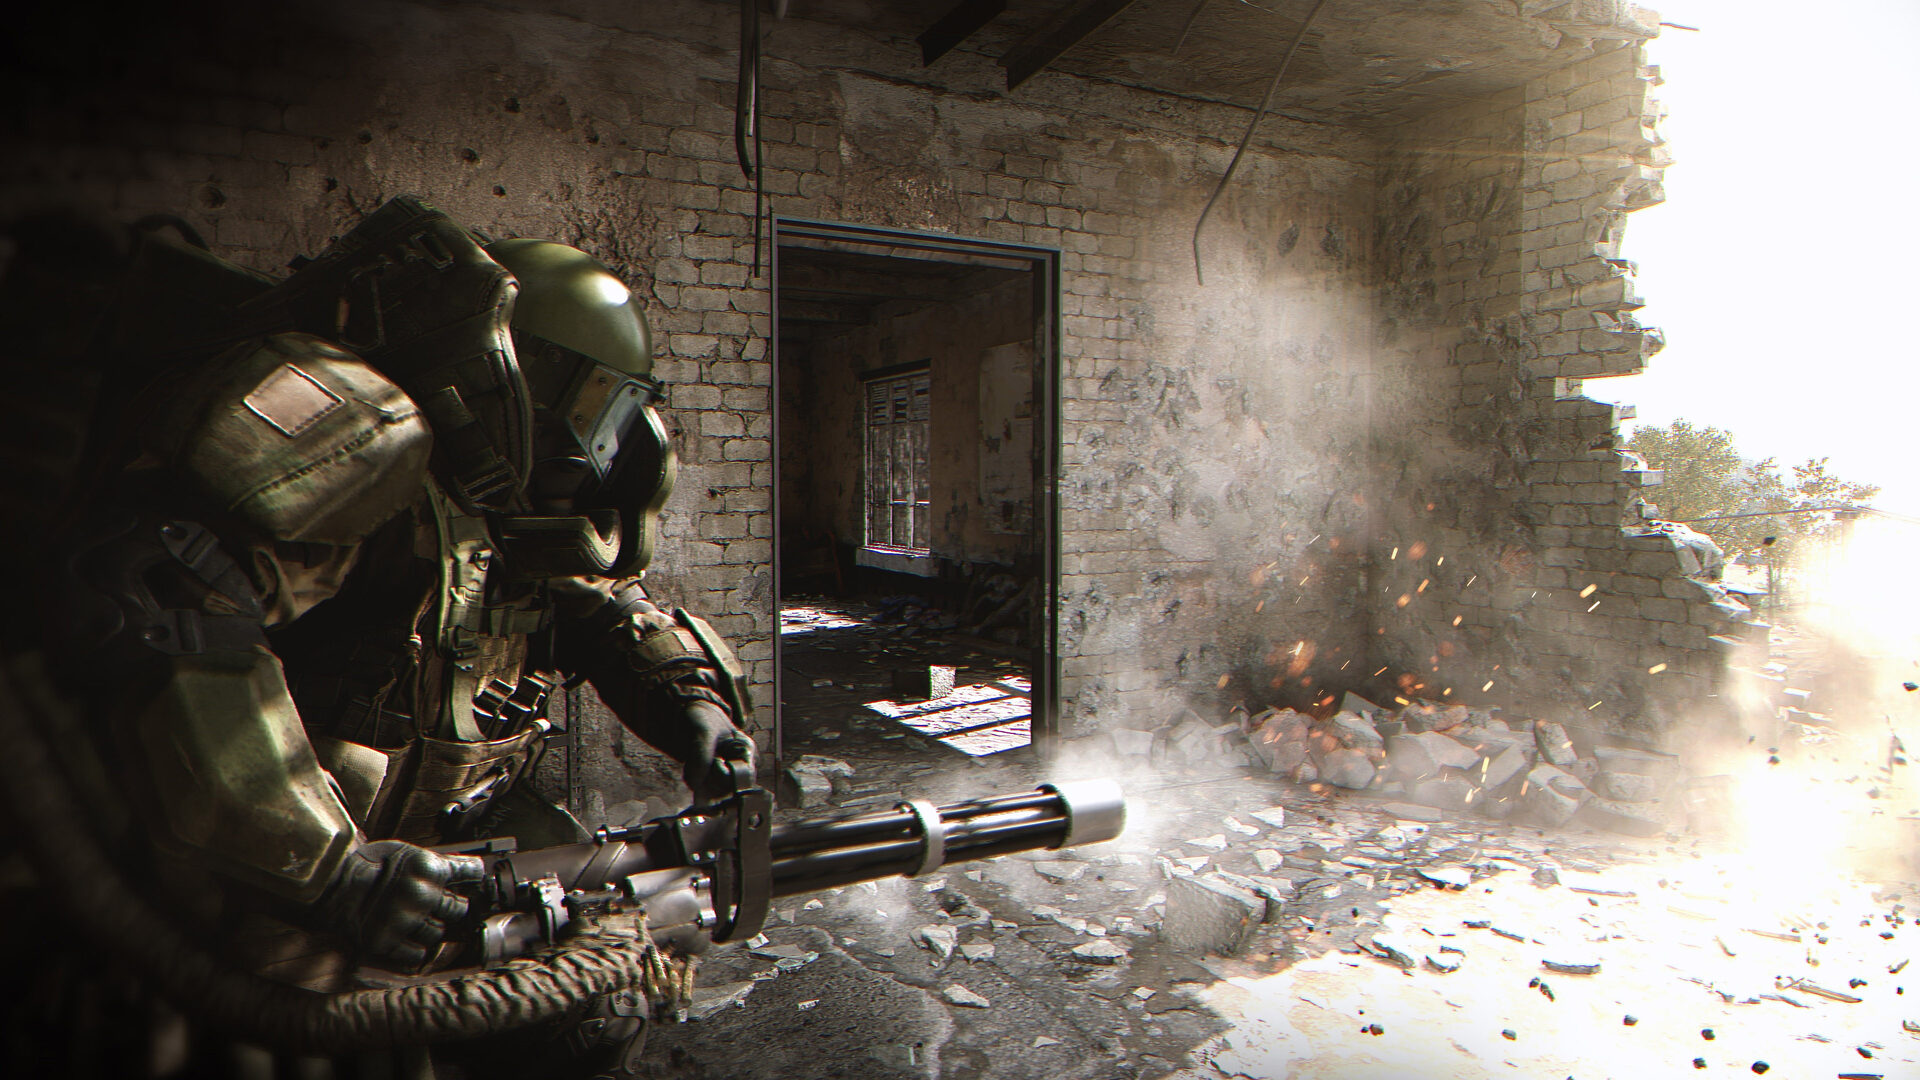 Buy Call of Duty: Modern Warfare Green Gift key now!